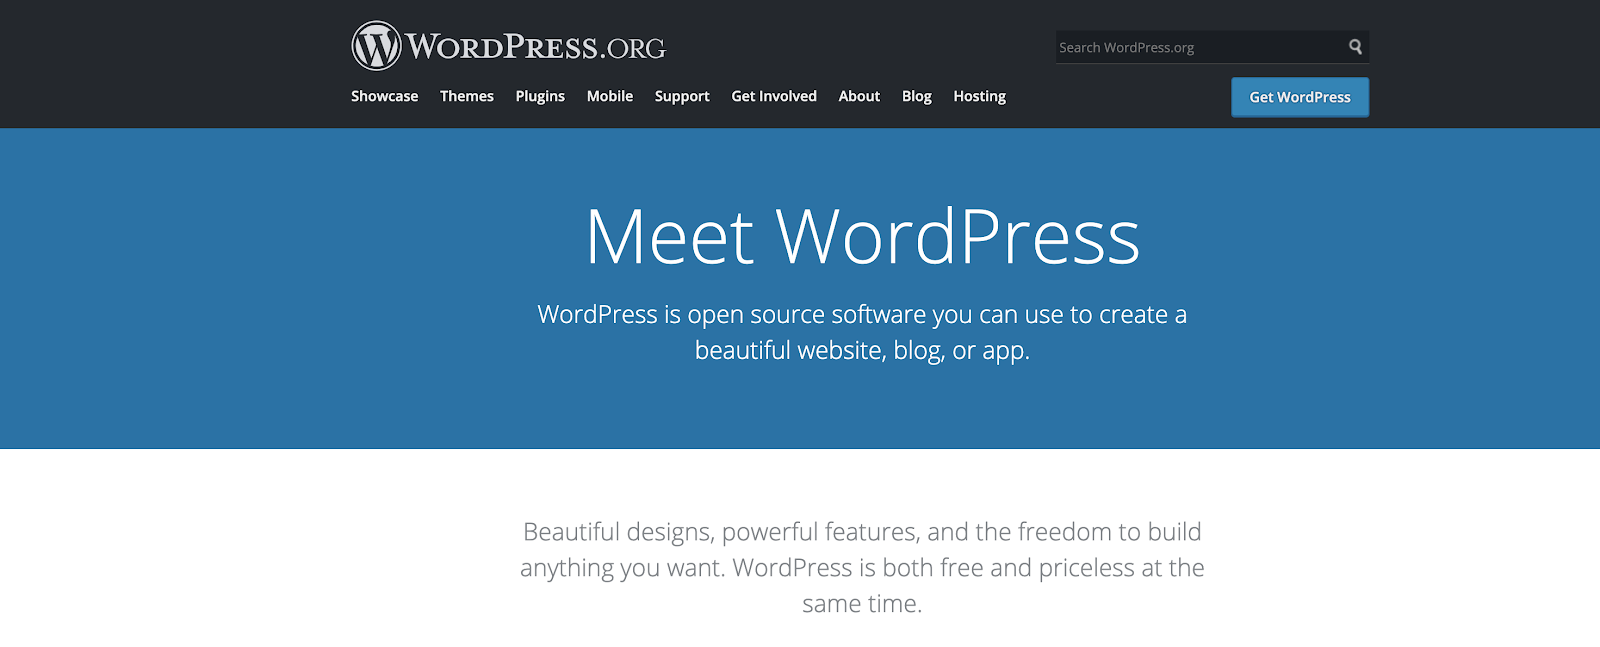 Self-Hosted WordPress (Blogging Platforms Example) Homepage Screenshot